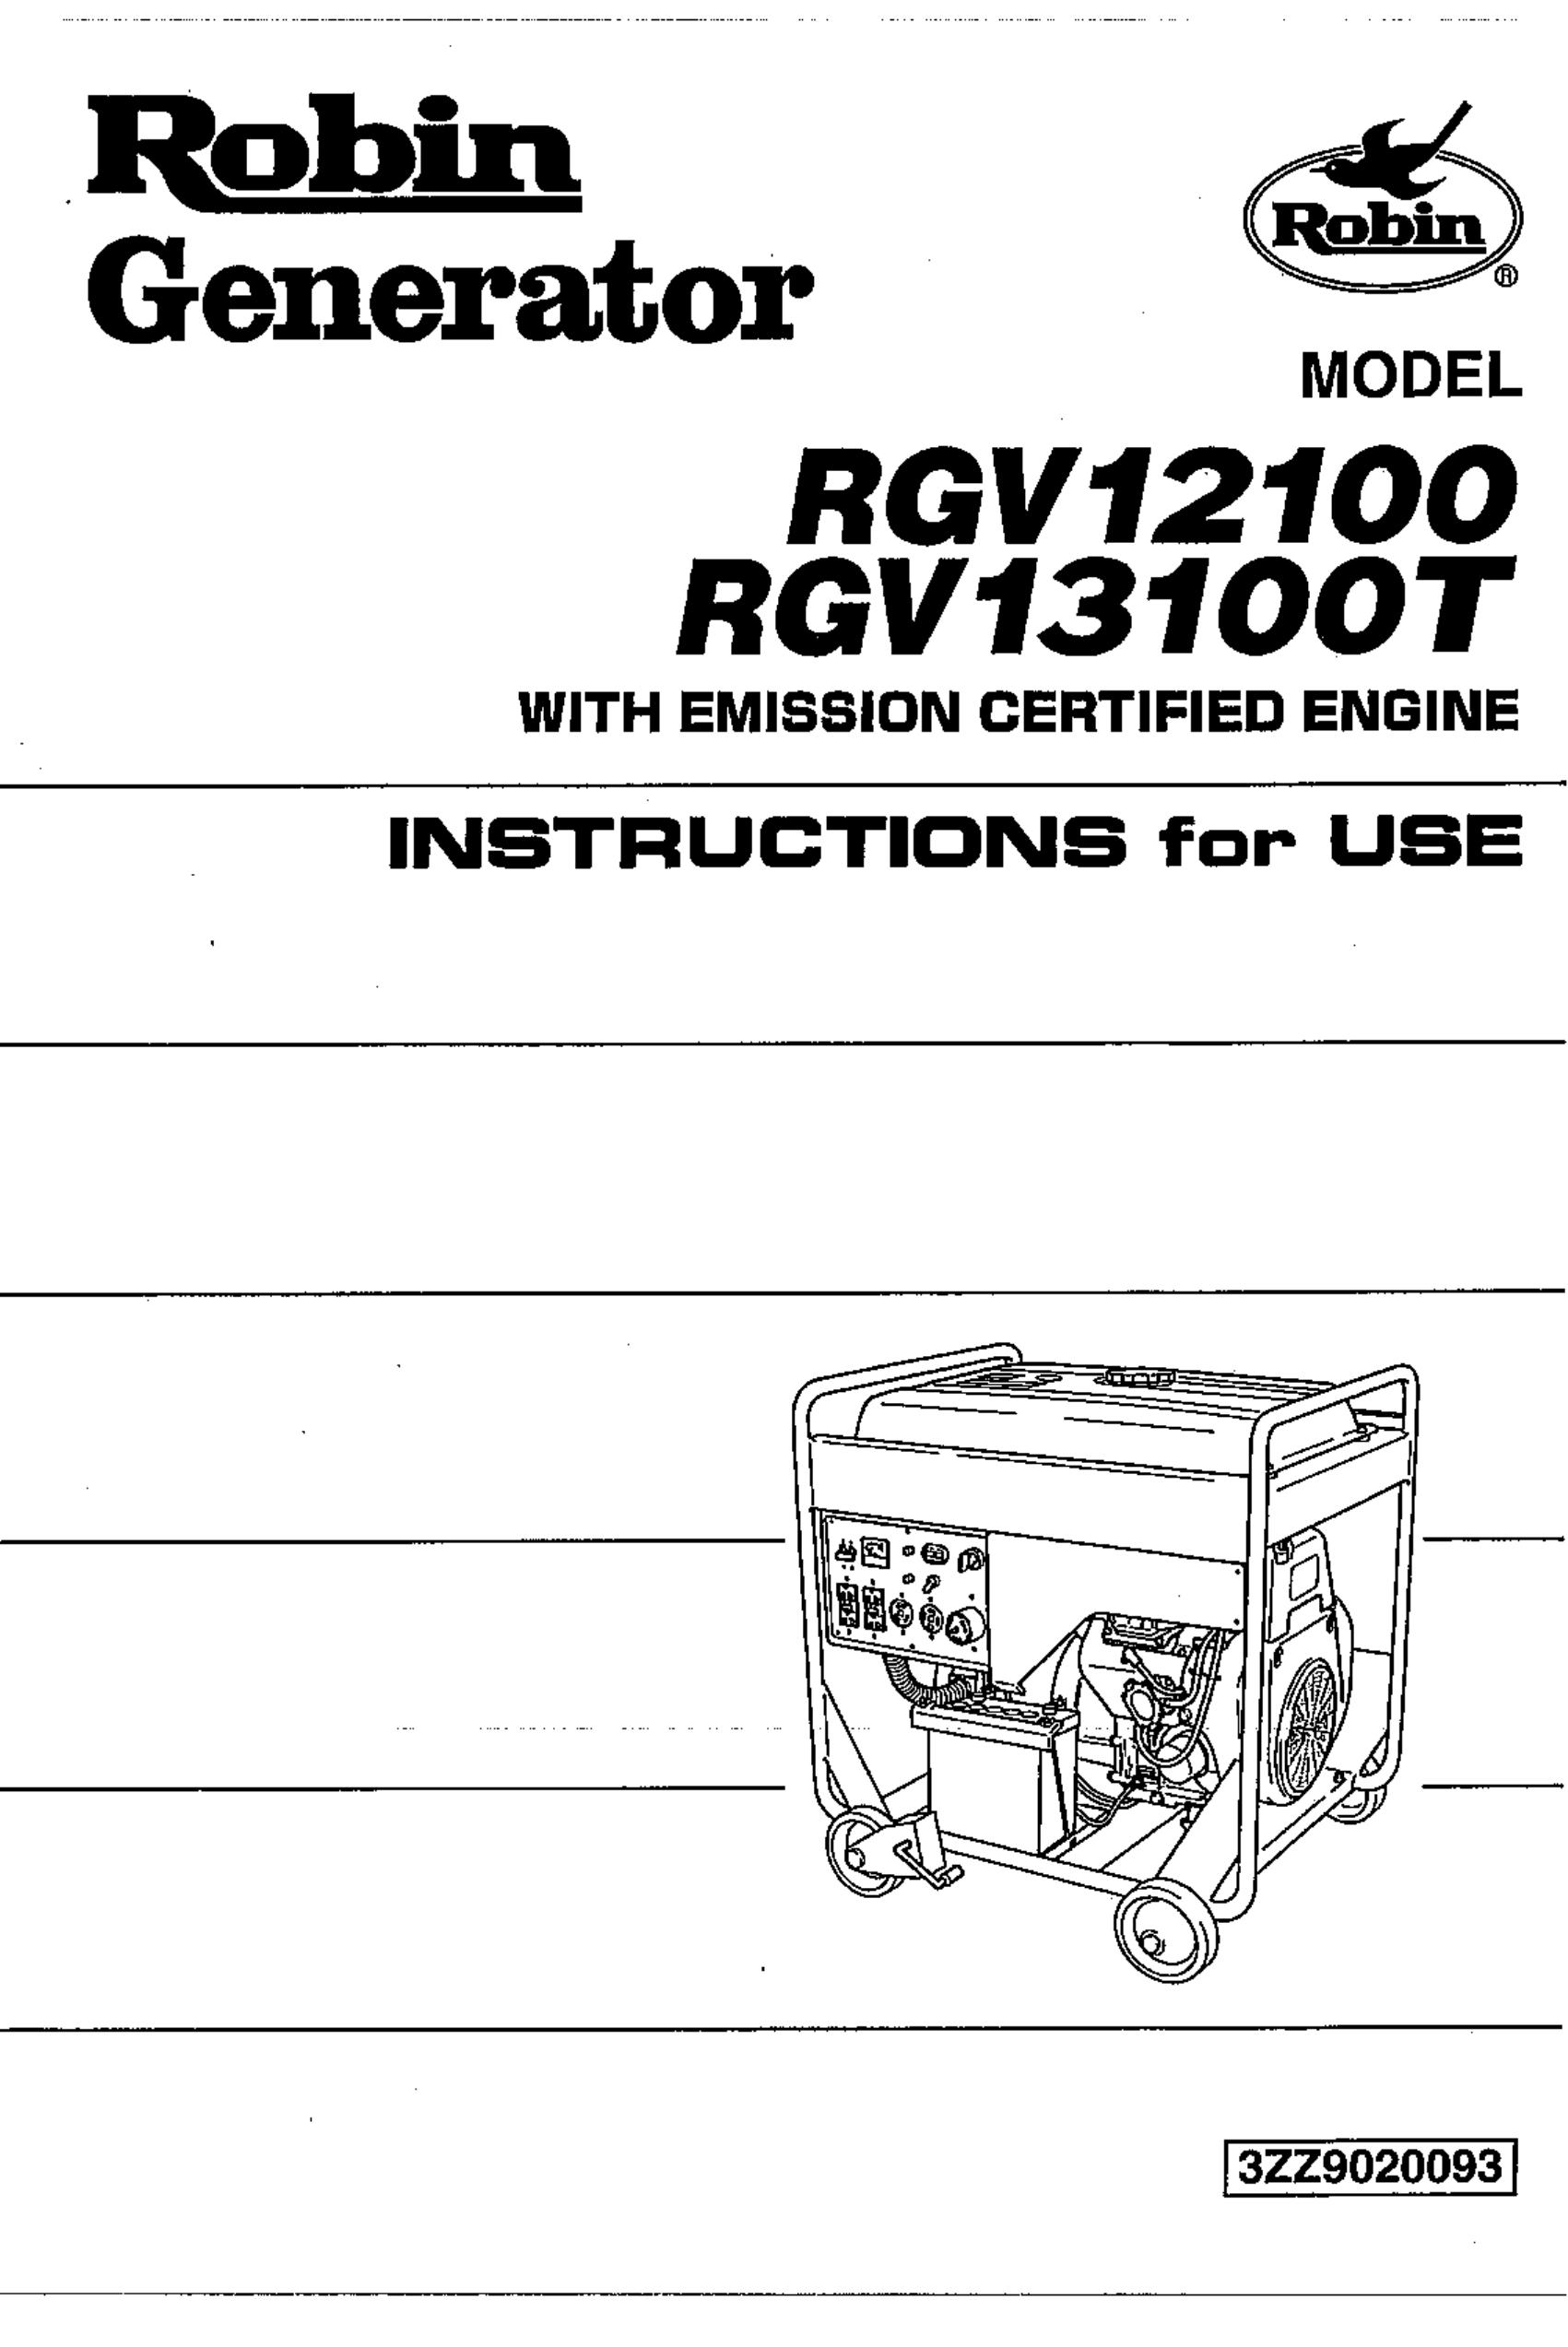 Subaru Robin Power Products RGV12100 Portable Generator User Manual